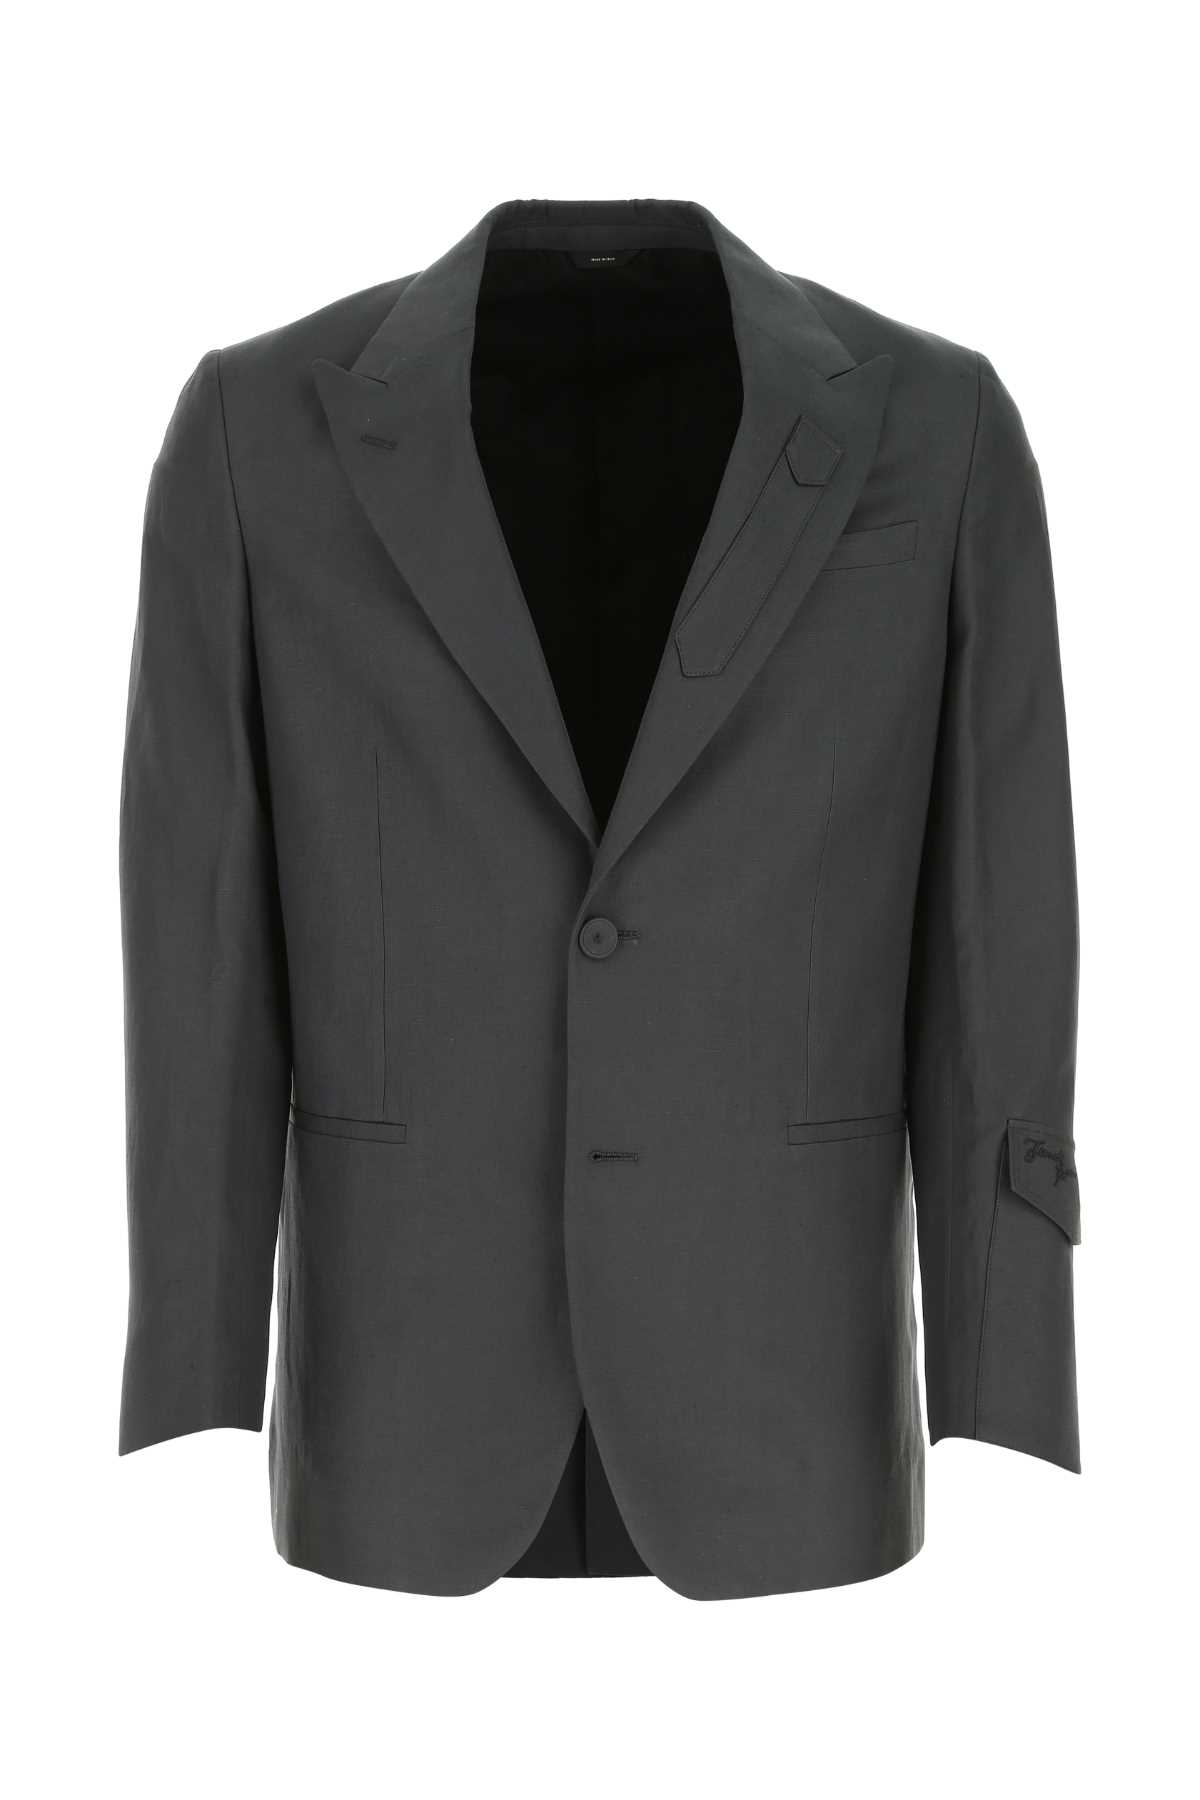 Fendi Dark Grey Linen Blend Blazer In F0y8x